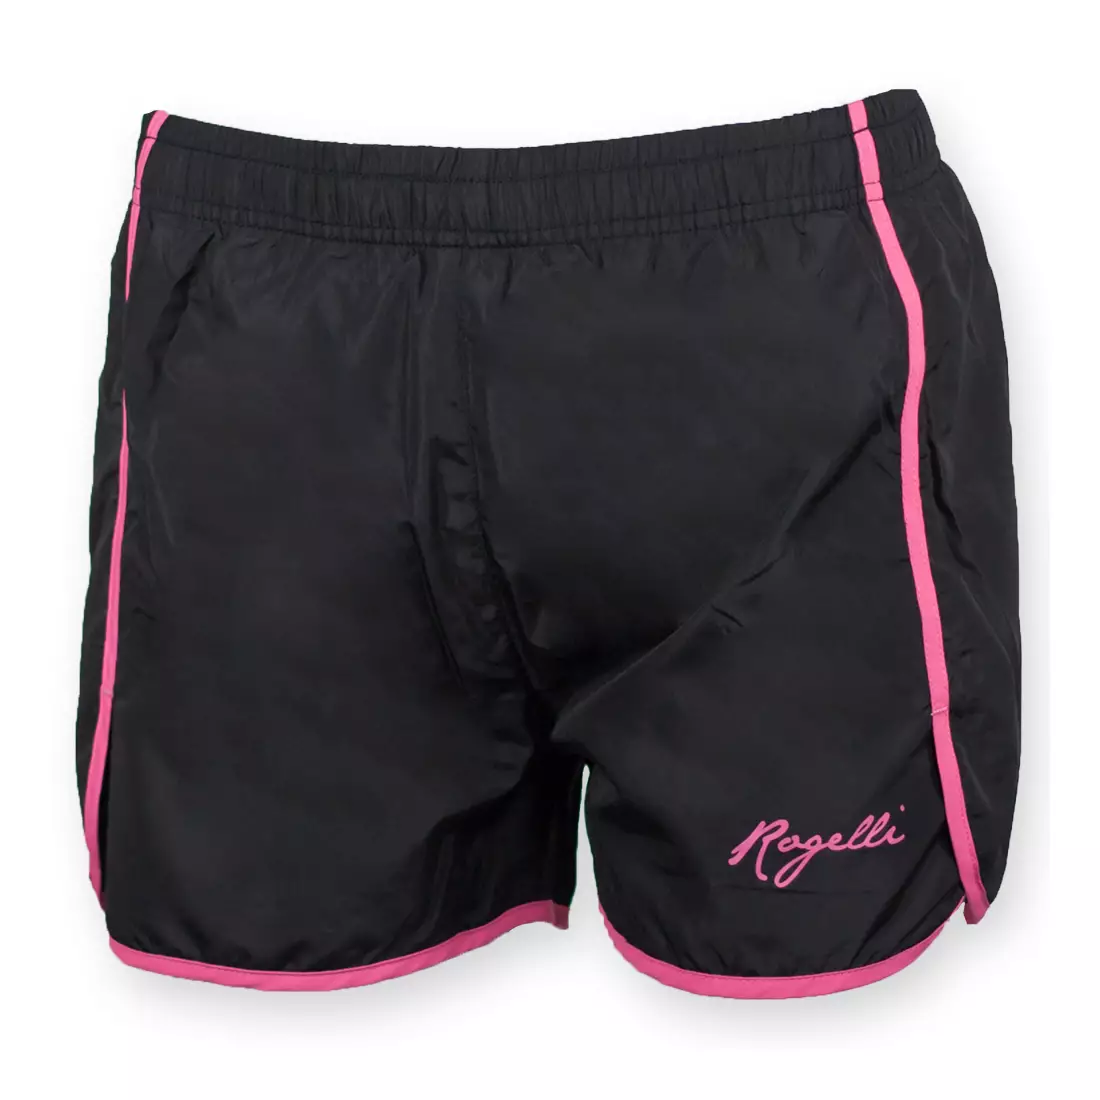 ROGELLI KYRA women's running shorts, black and pink